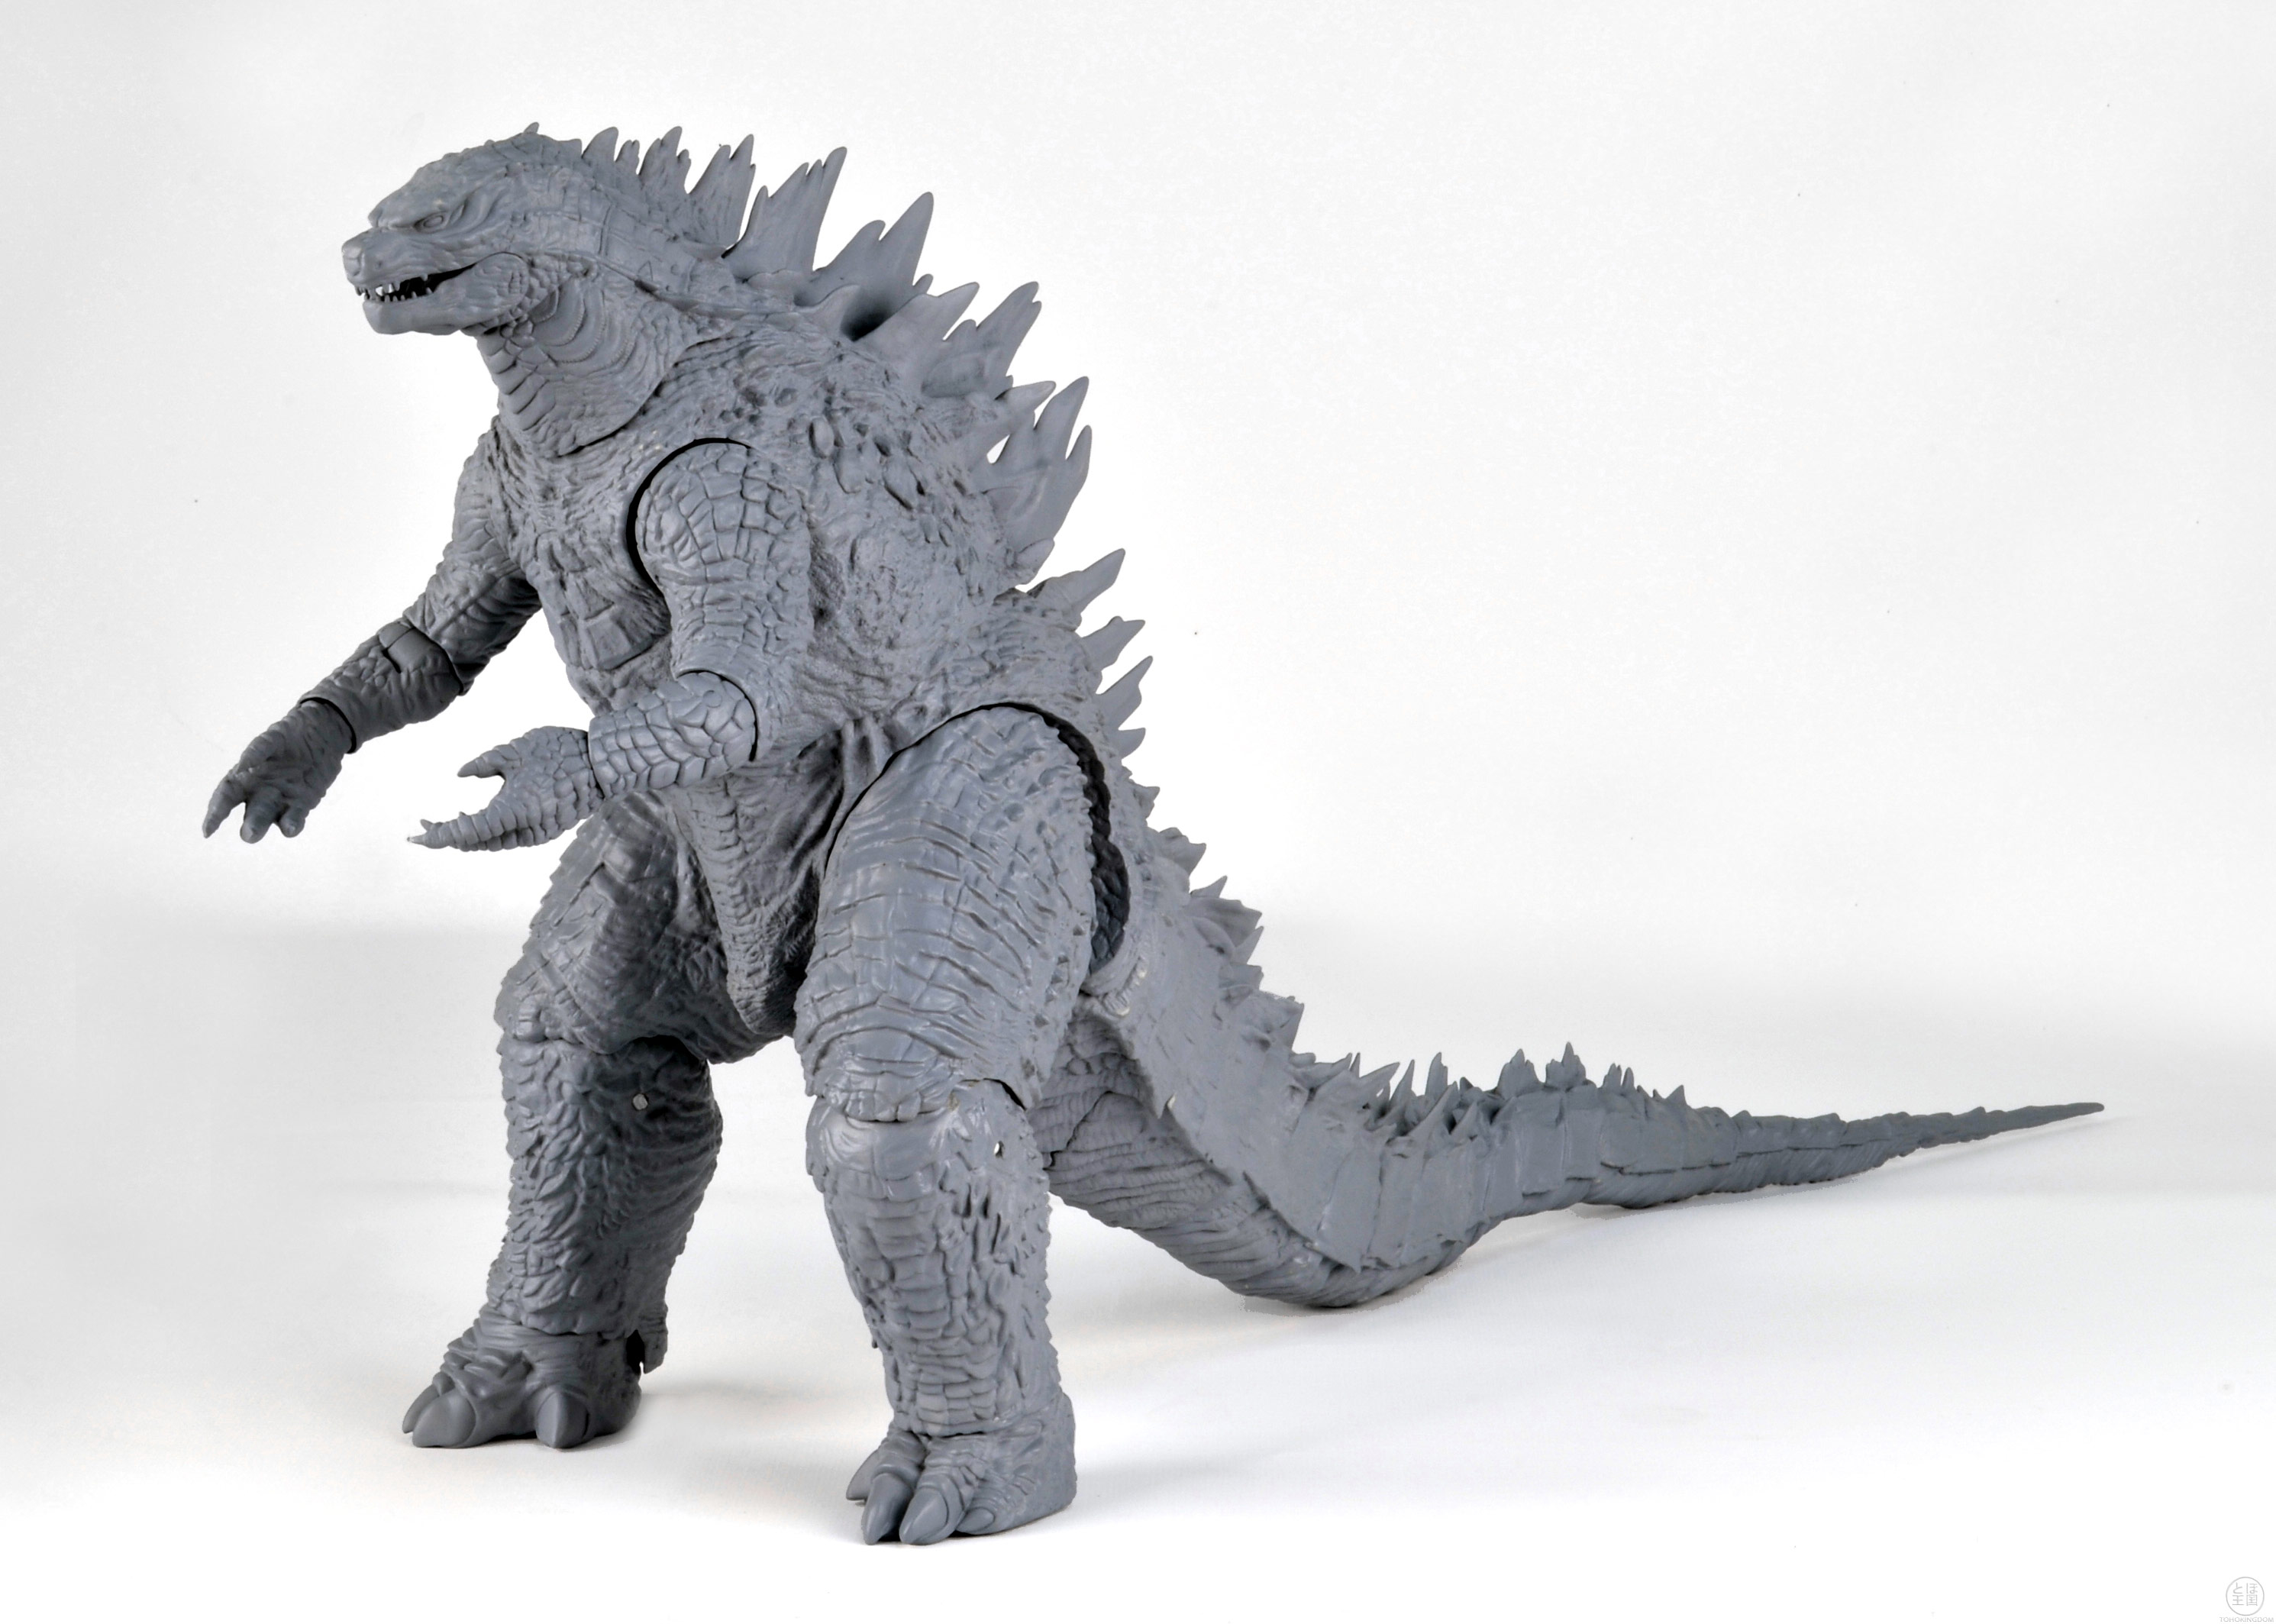 NECA Godzilla 12Inch and 24Inch Prototypes Revealed Tokunation